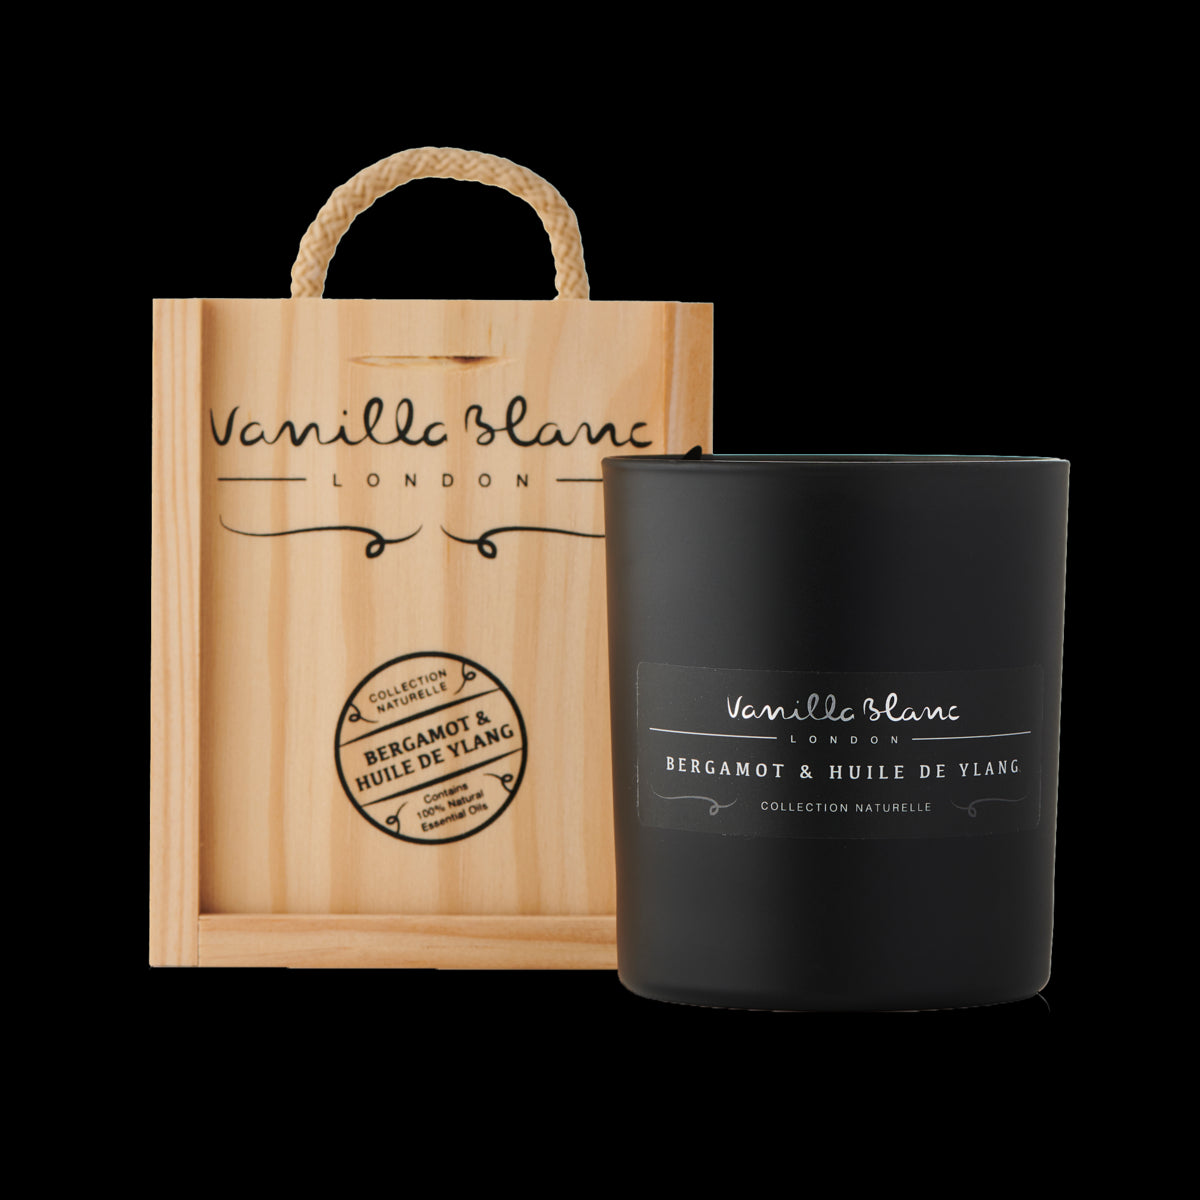 Vanilla Blanc Bergamot & Huile de Ylang Matt Edition Candle in a Signature® Wooden Gift Box